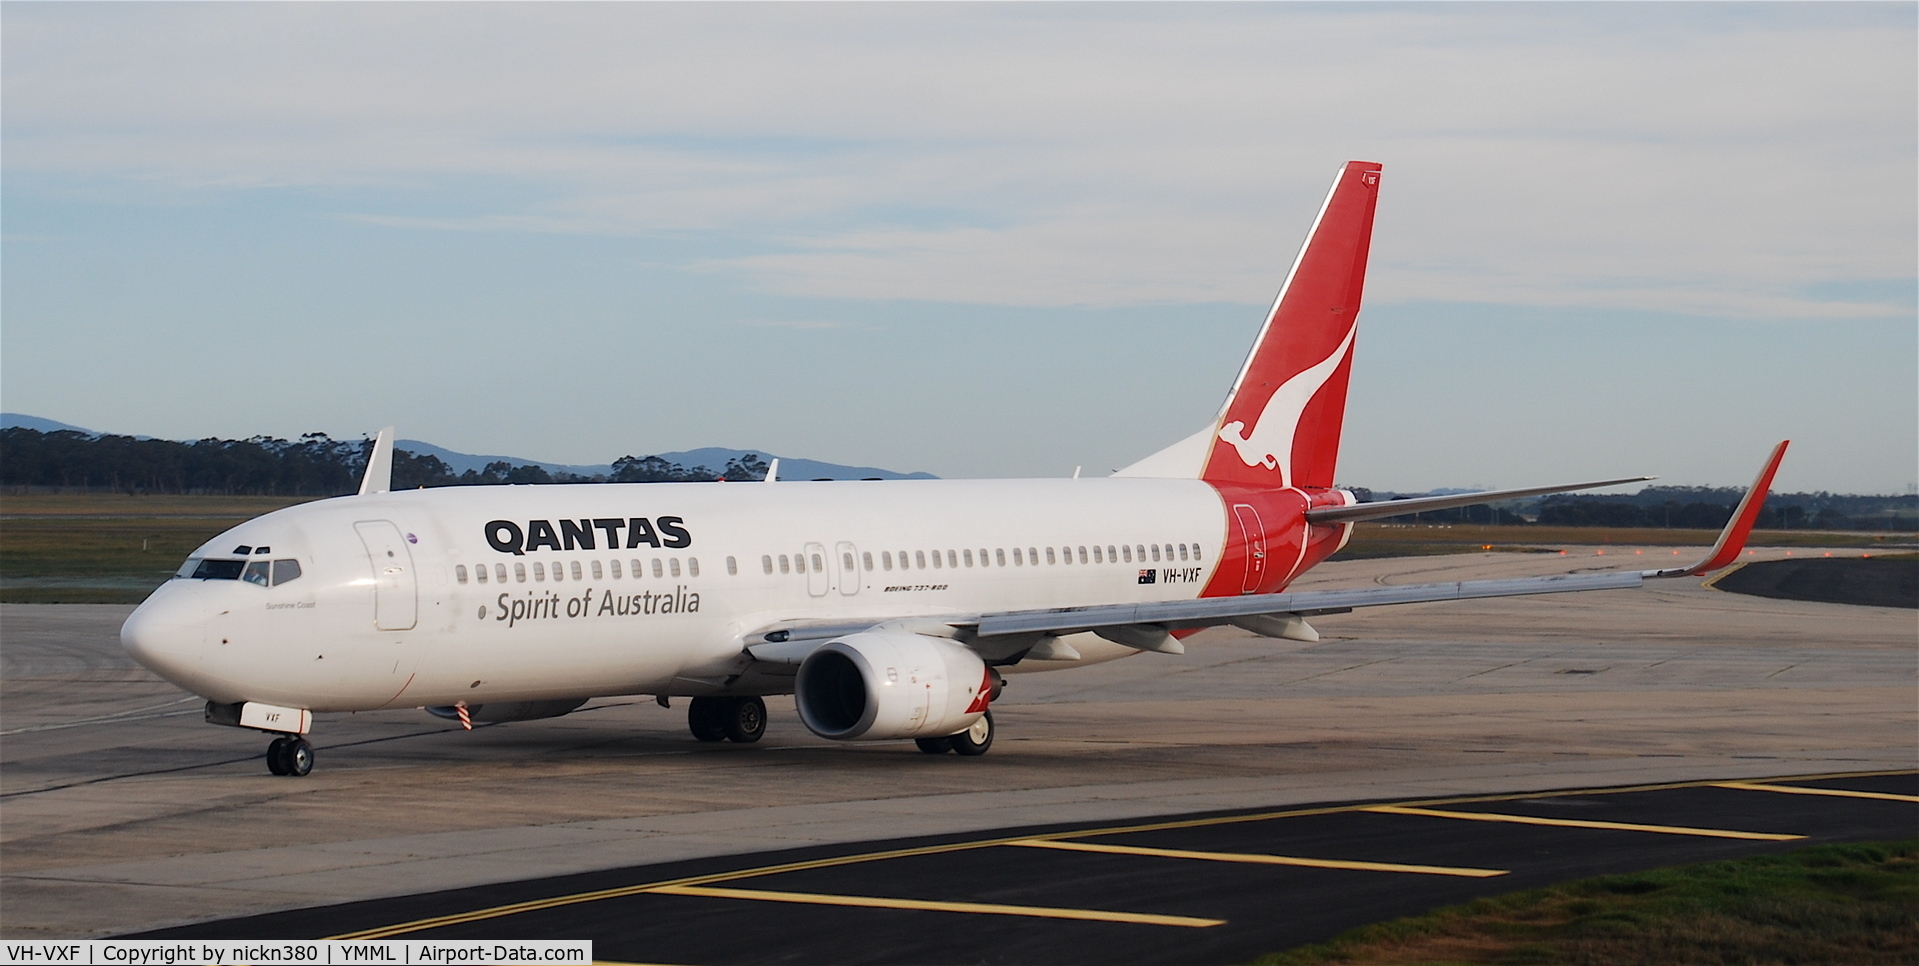 VH-VXF, 2001 Boeing 737-838 C/N 29553, This qantas 738 has just arrived, taken around 07:00 local